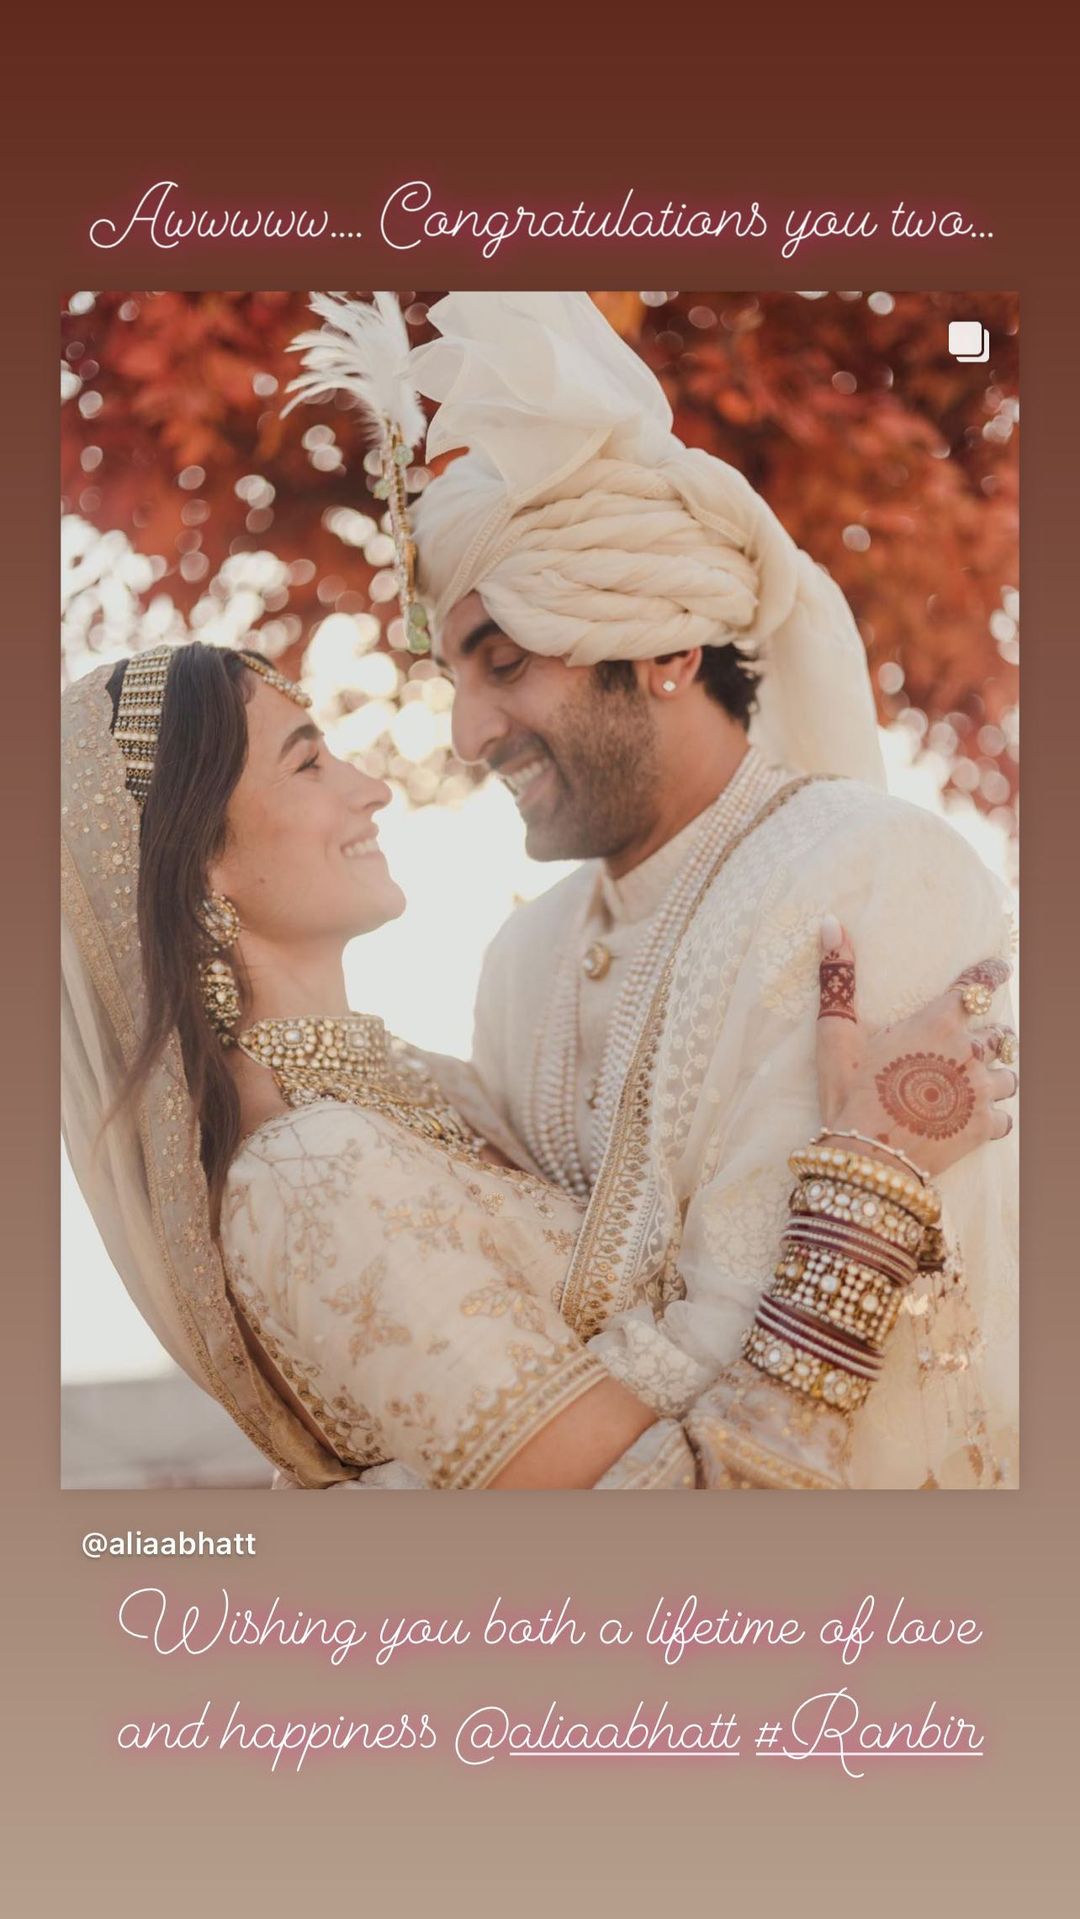 priyanka chopra jonas instagram, alia bhatt and ranbir kapoor wedding, ranbir kapoor,